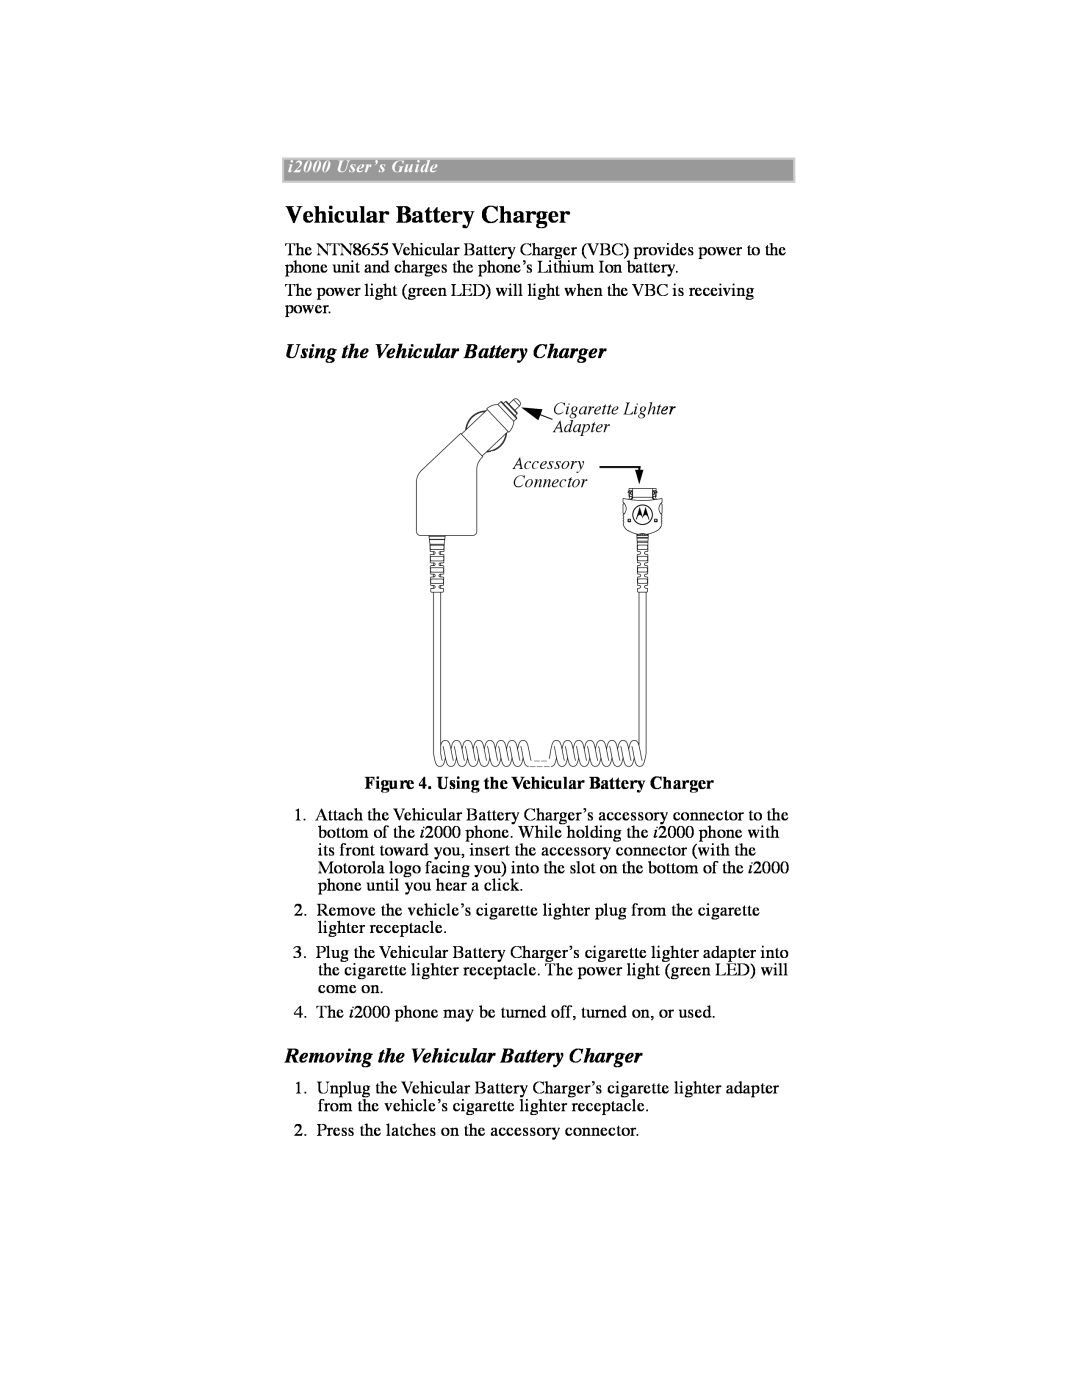 Motorola iDEN manual Using the Vehicular Battery Charger, Removing the Vehicular Battery Charger, i2000 UserÕs Guide 